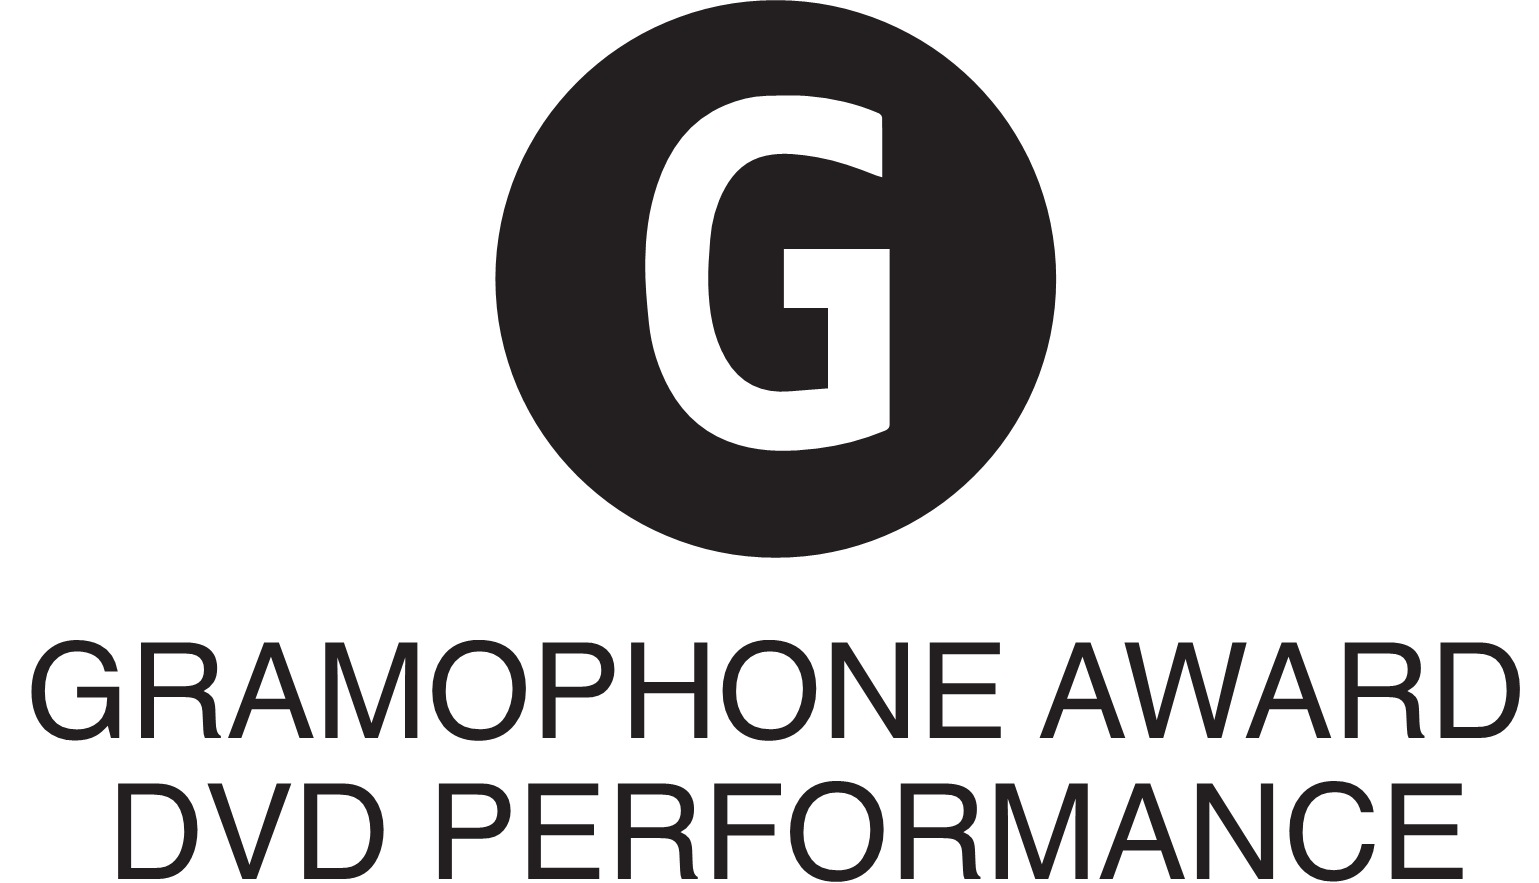 Gramophone Award: 'DVD Performance' (2012)